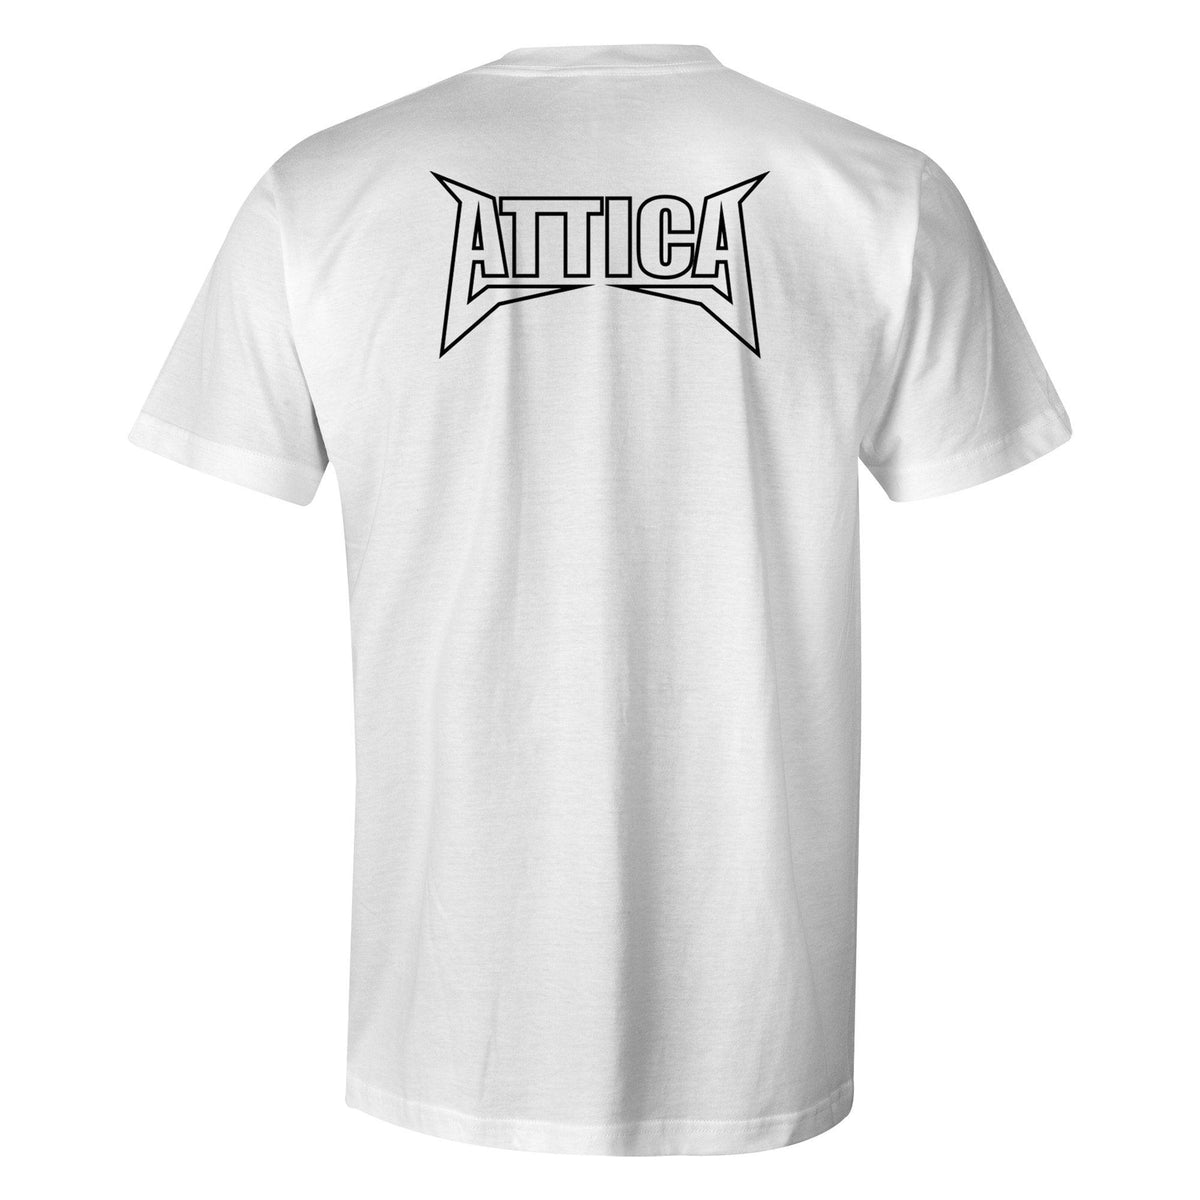 ATTICA 'Mental' T-Shirt - White - Funkshen Bodyboards